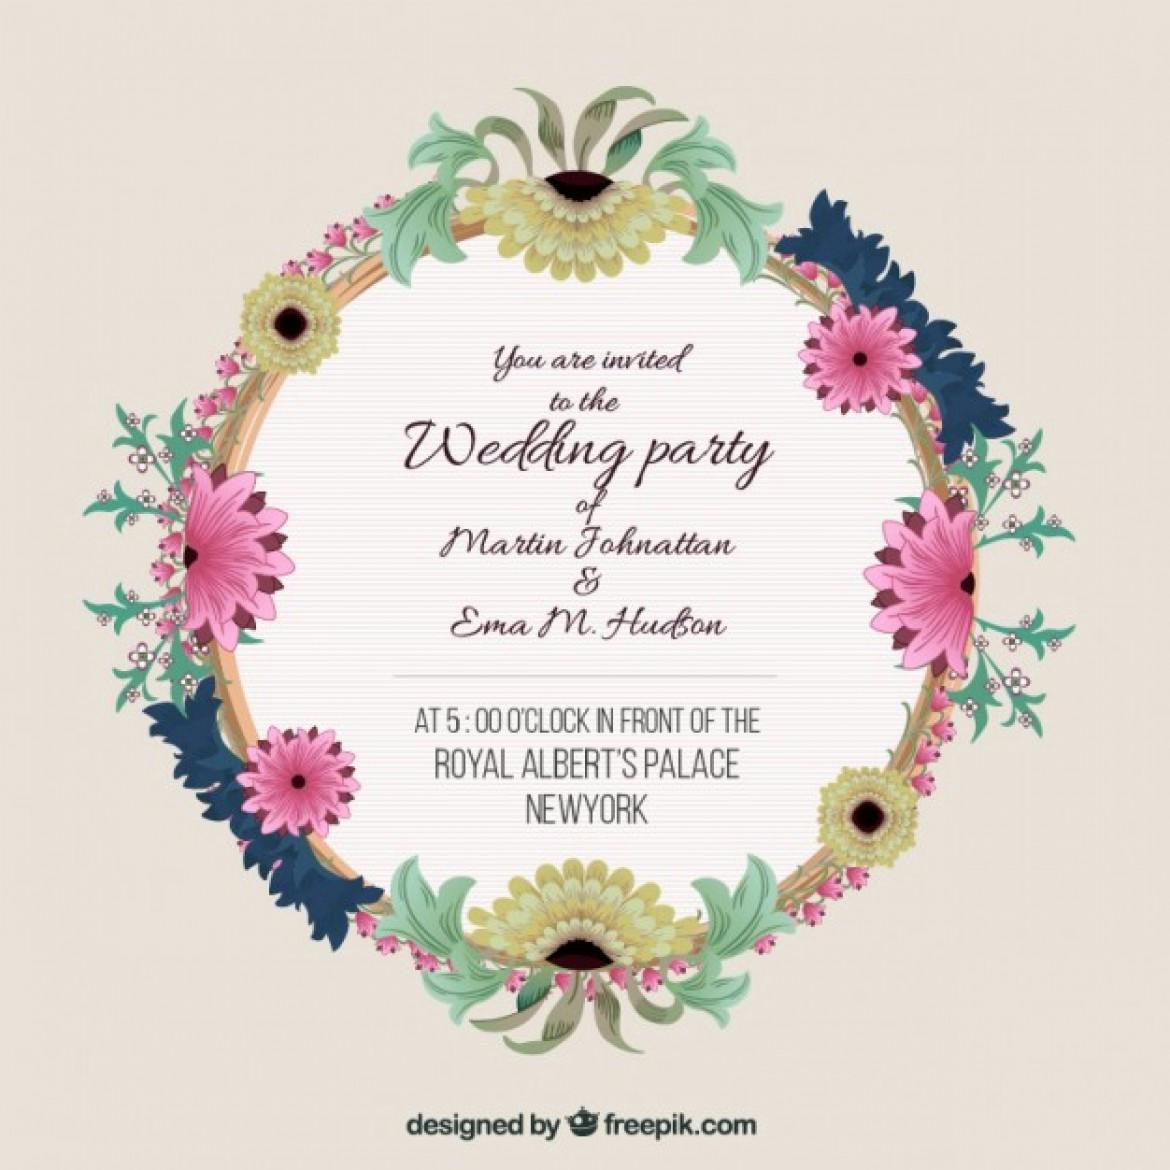 wpid-wedding-invitation-with-flowers_23-2147507491-1170x1170